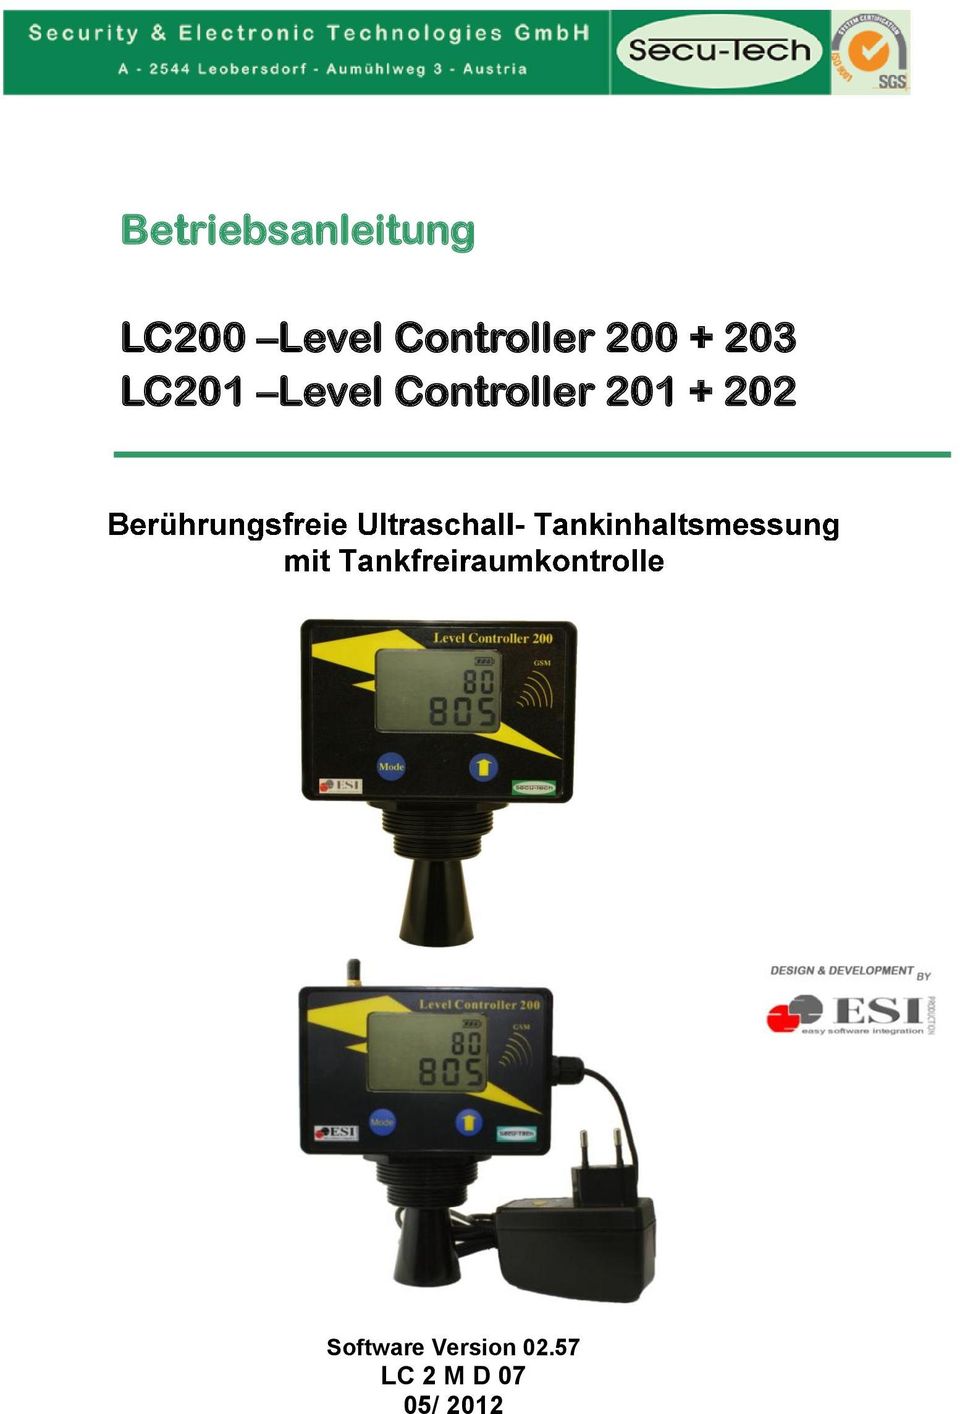 Level Controller 201 + 202